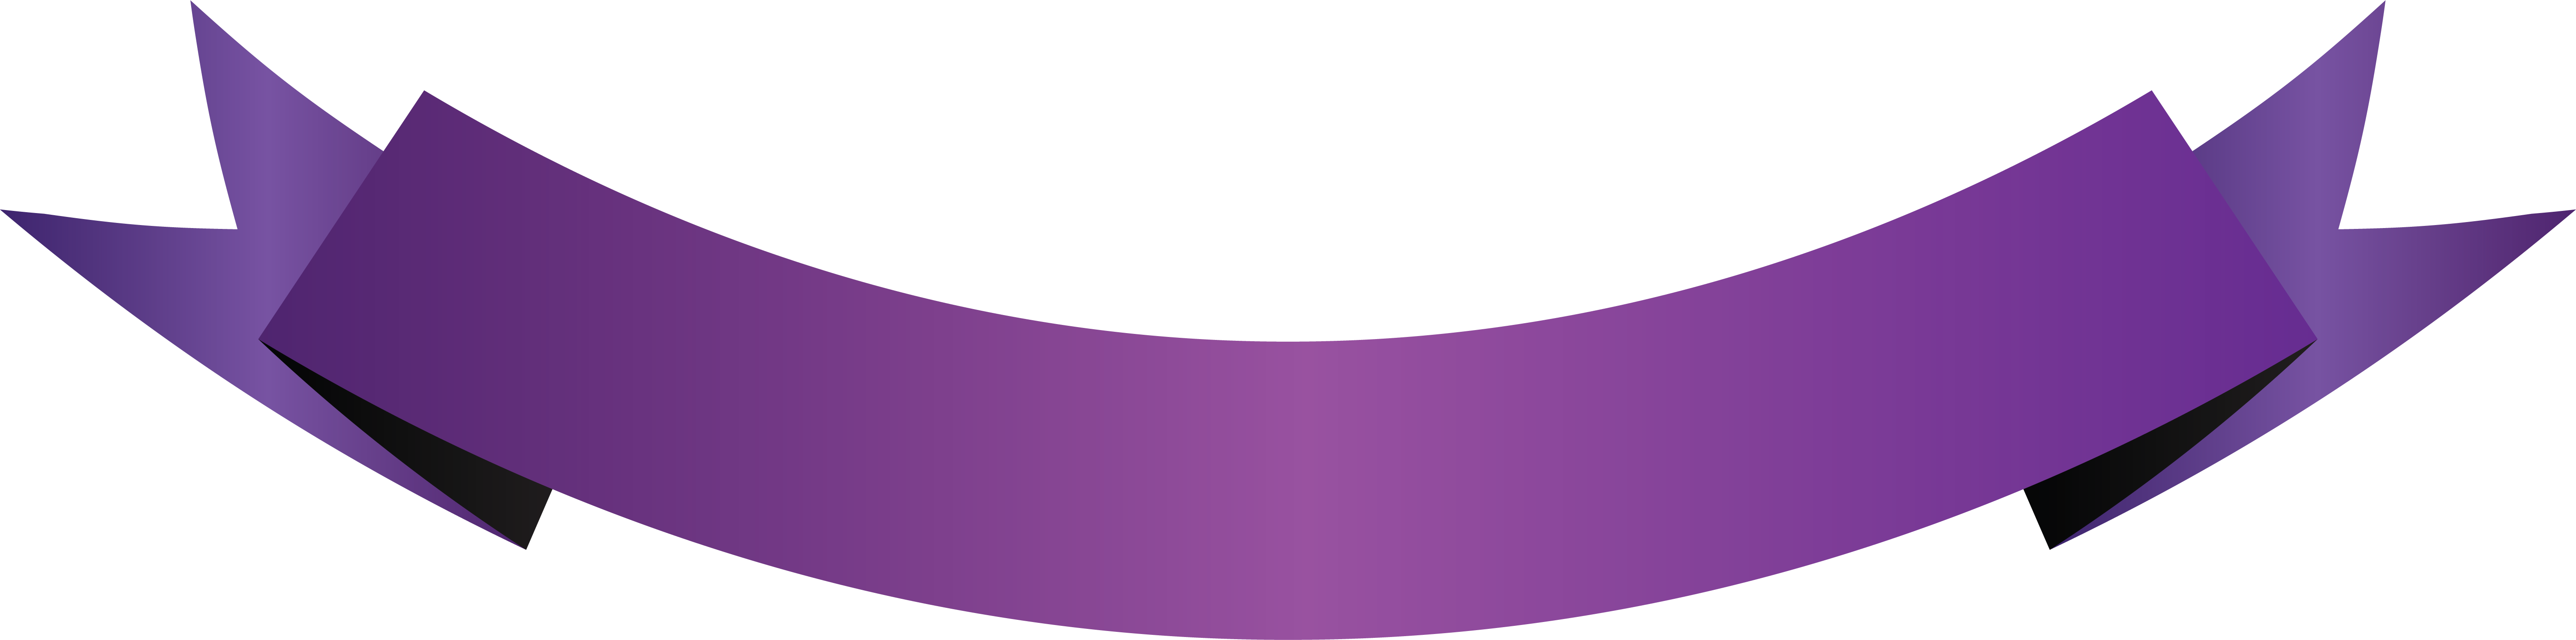 Purple Web Banner - Web Banner (6010x1493)